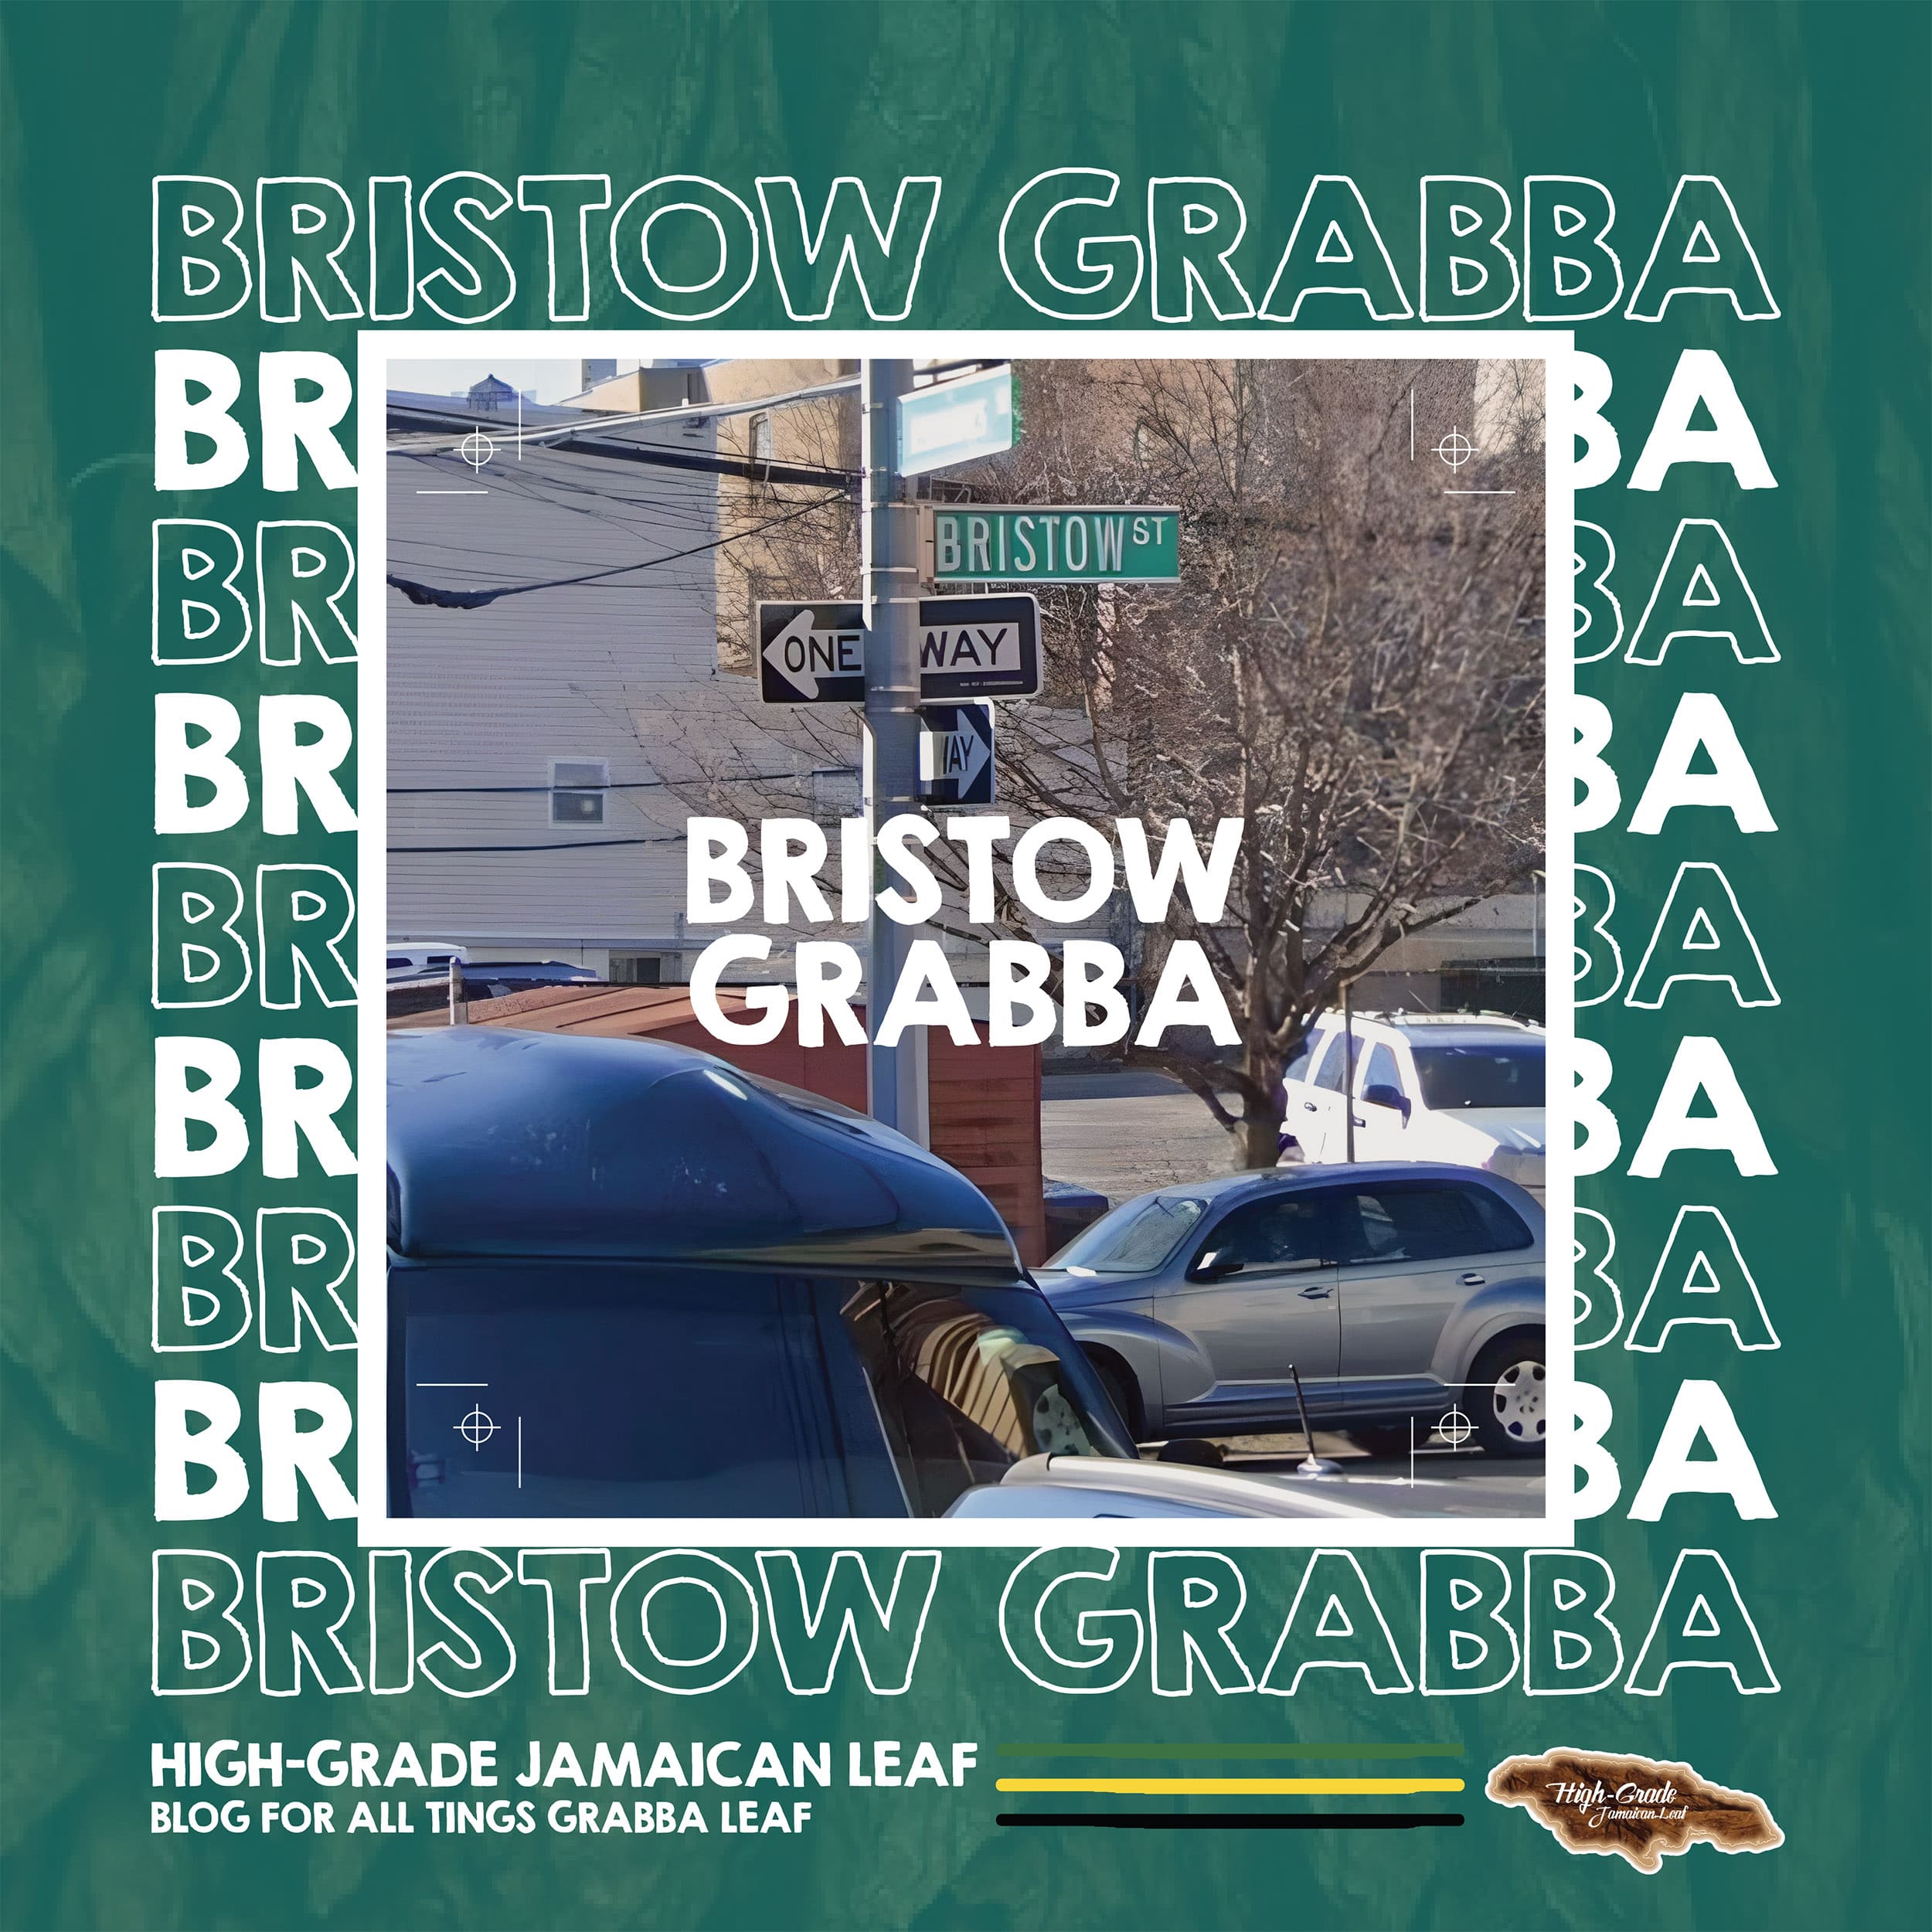 Bristow Grabba (Also Known as Bristol Grabba)